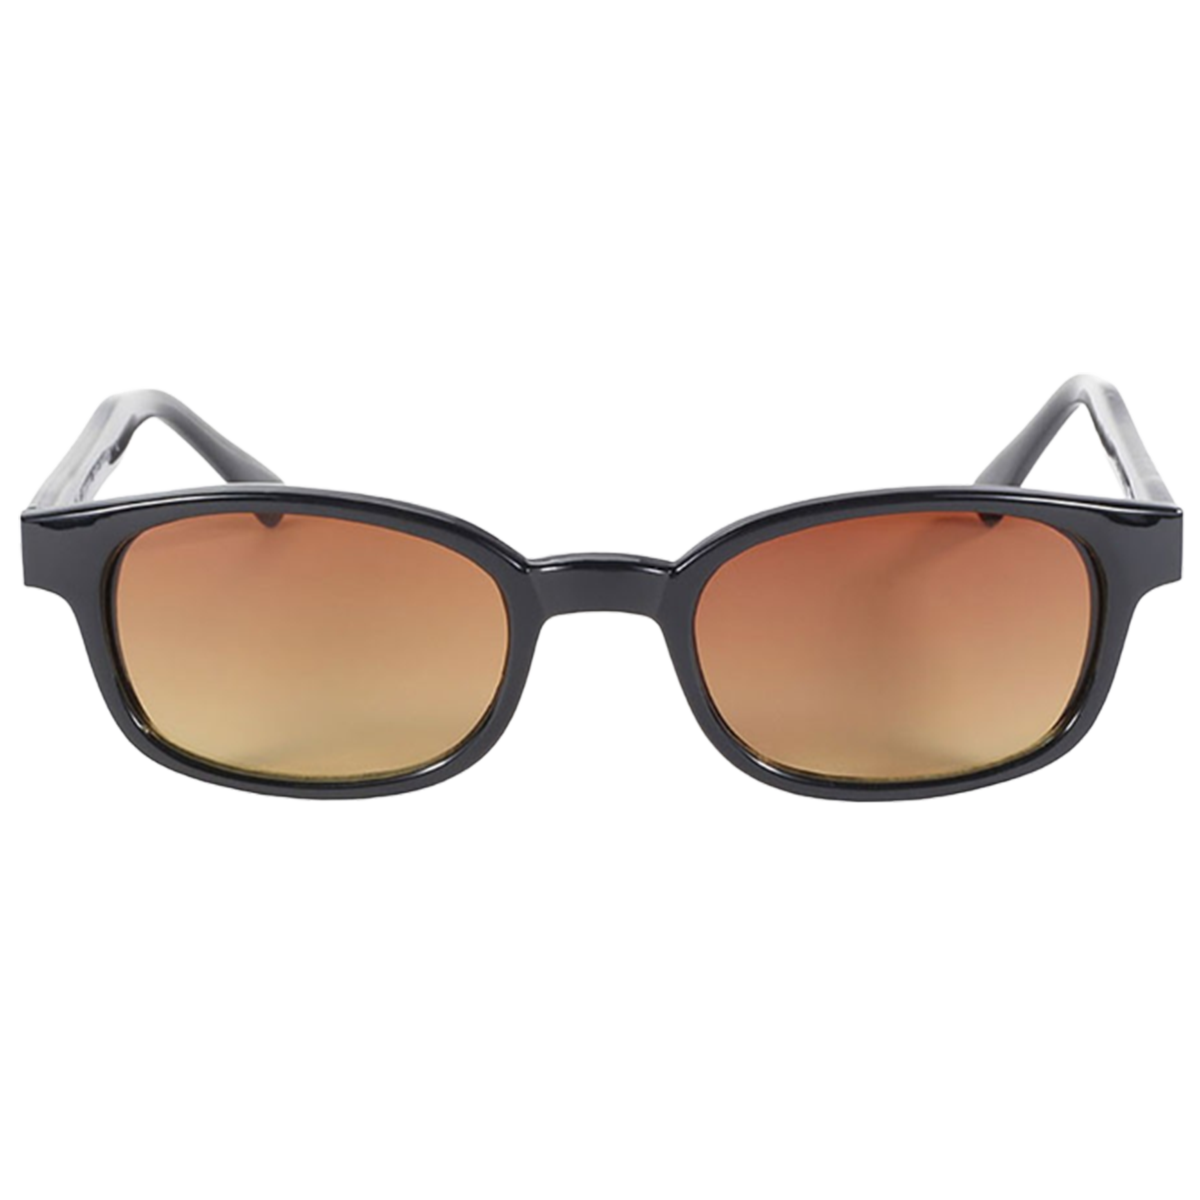 Sunglasses KD's 21119 Classic - Amber lenses